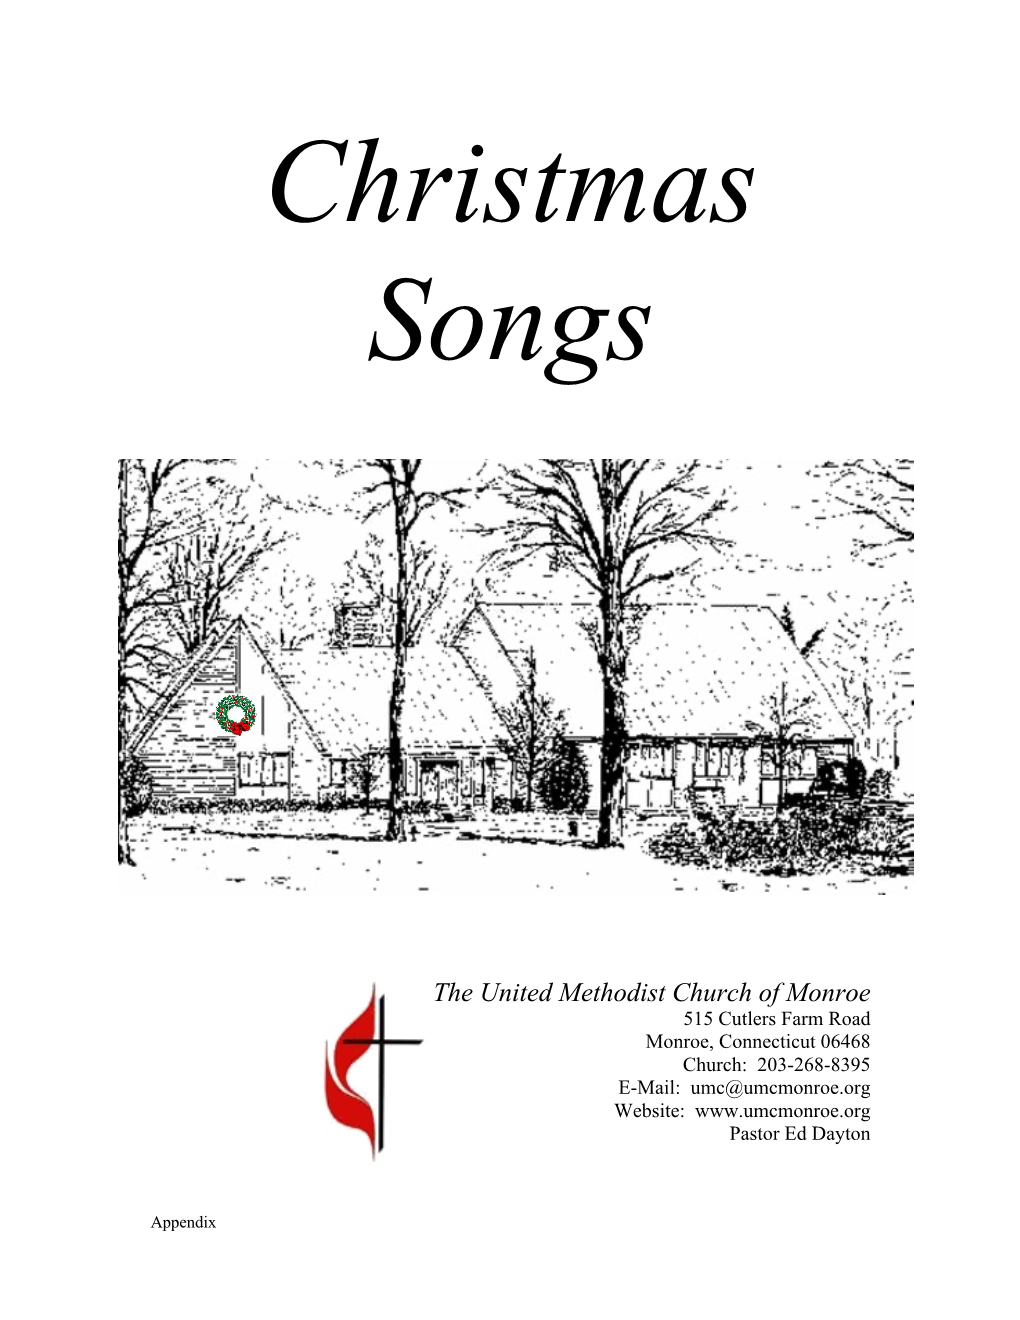 Christmas Songs – Lyrics 2020